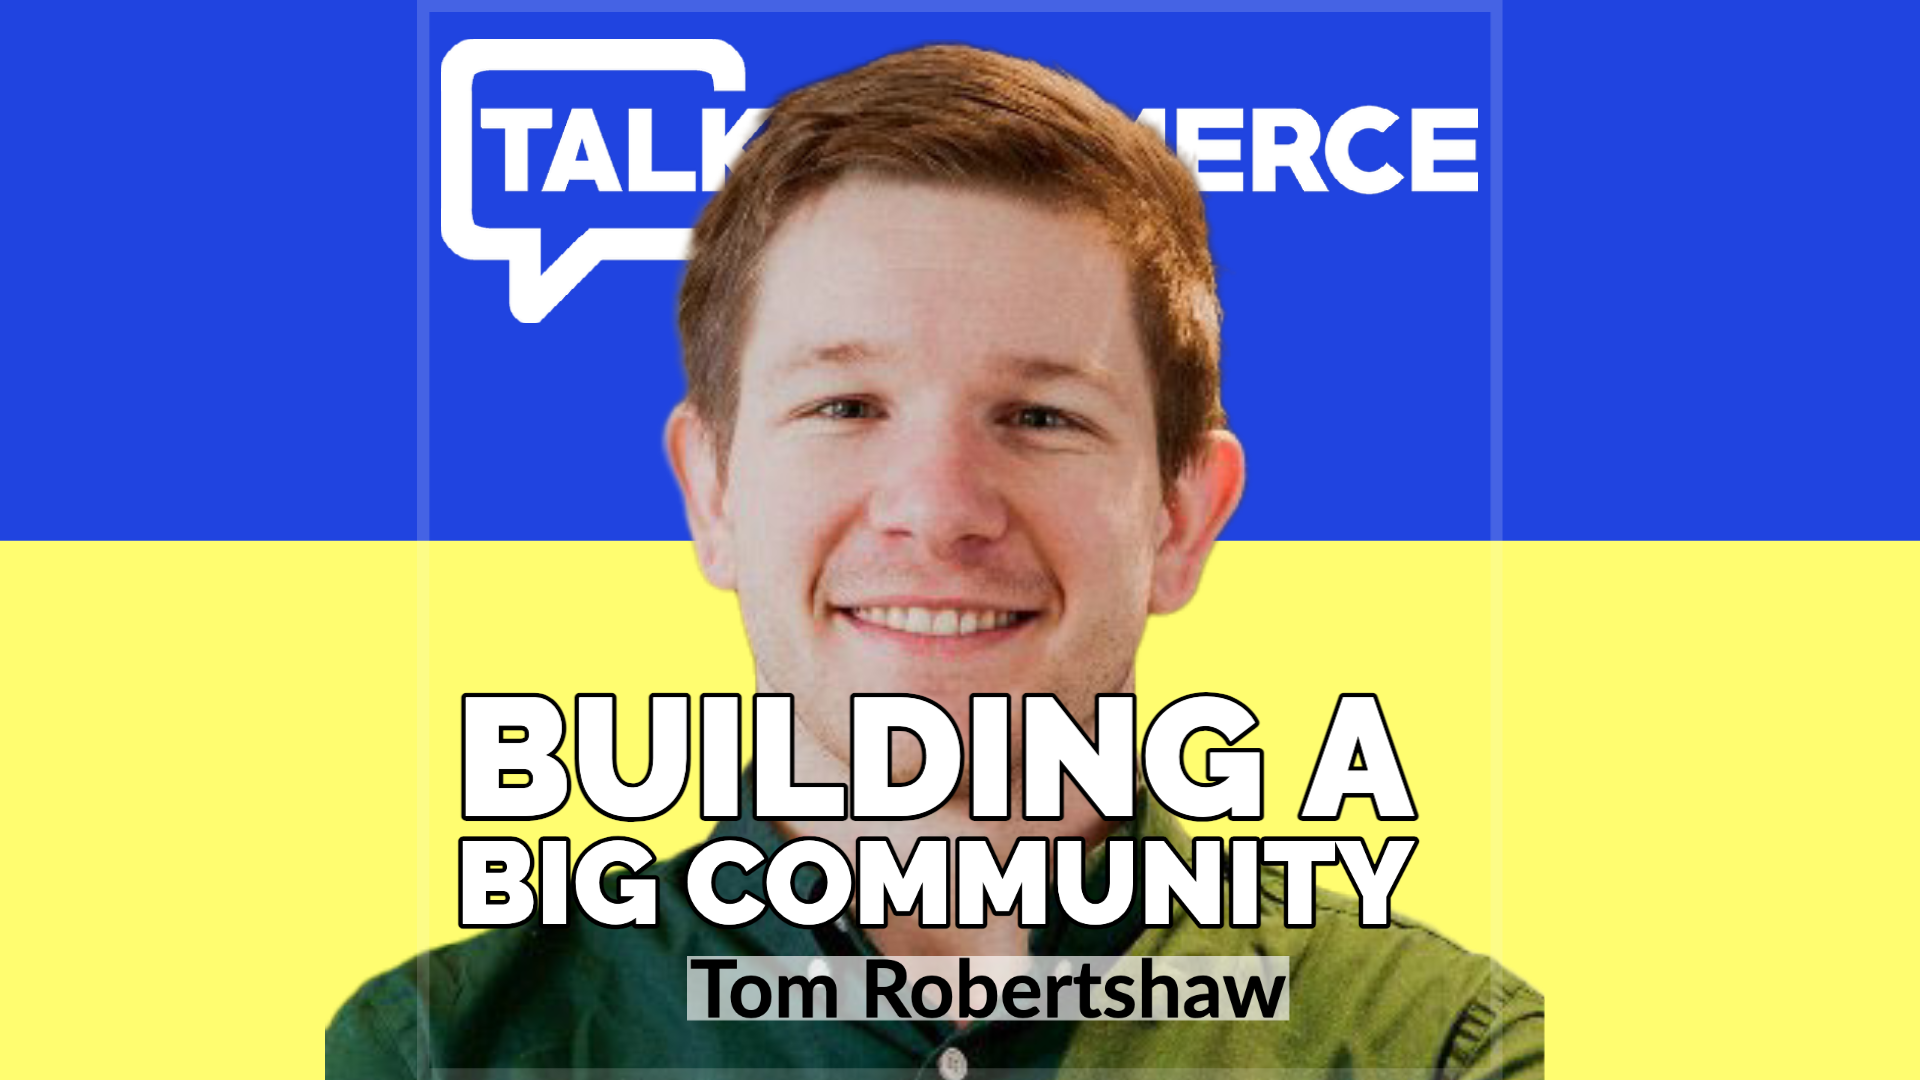 Talk-Commerce Tom Robertshaw